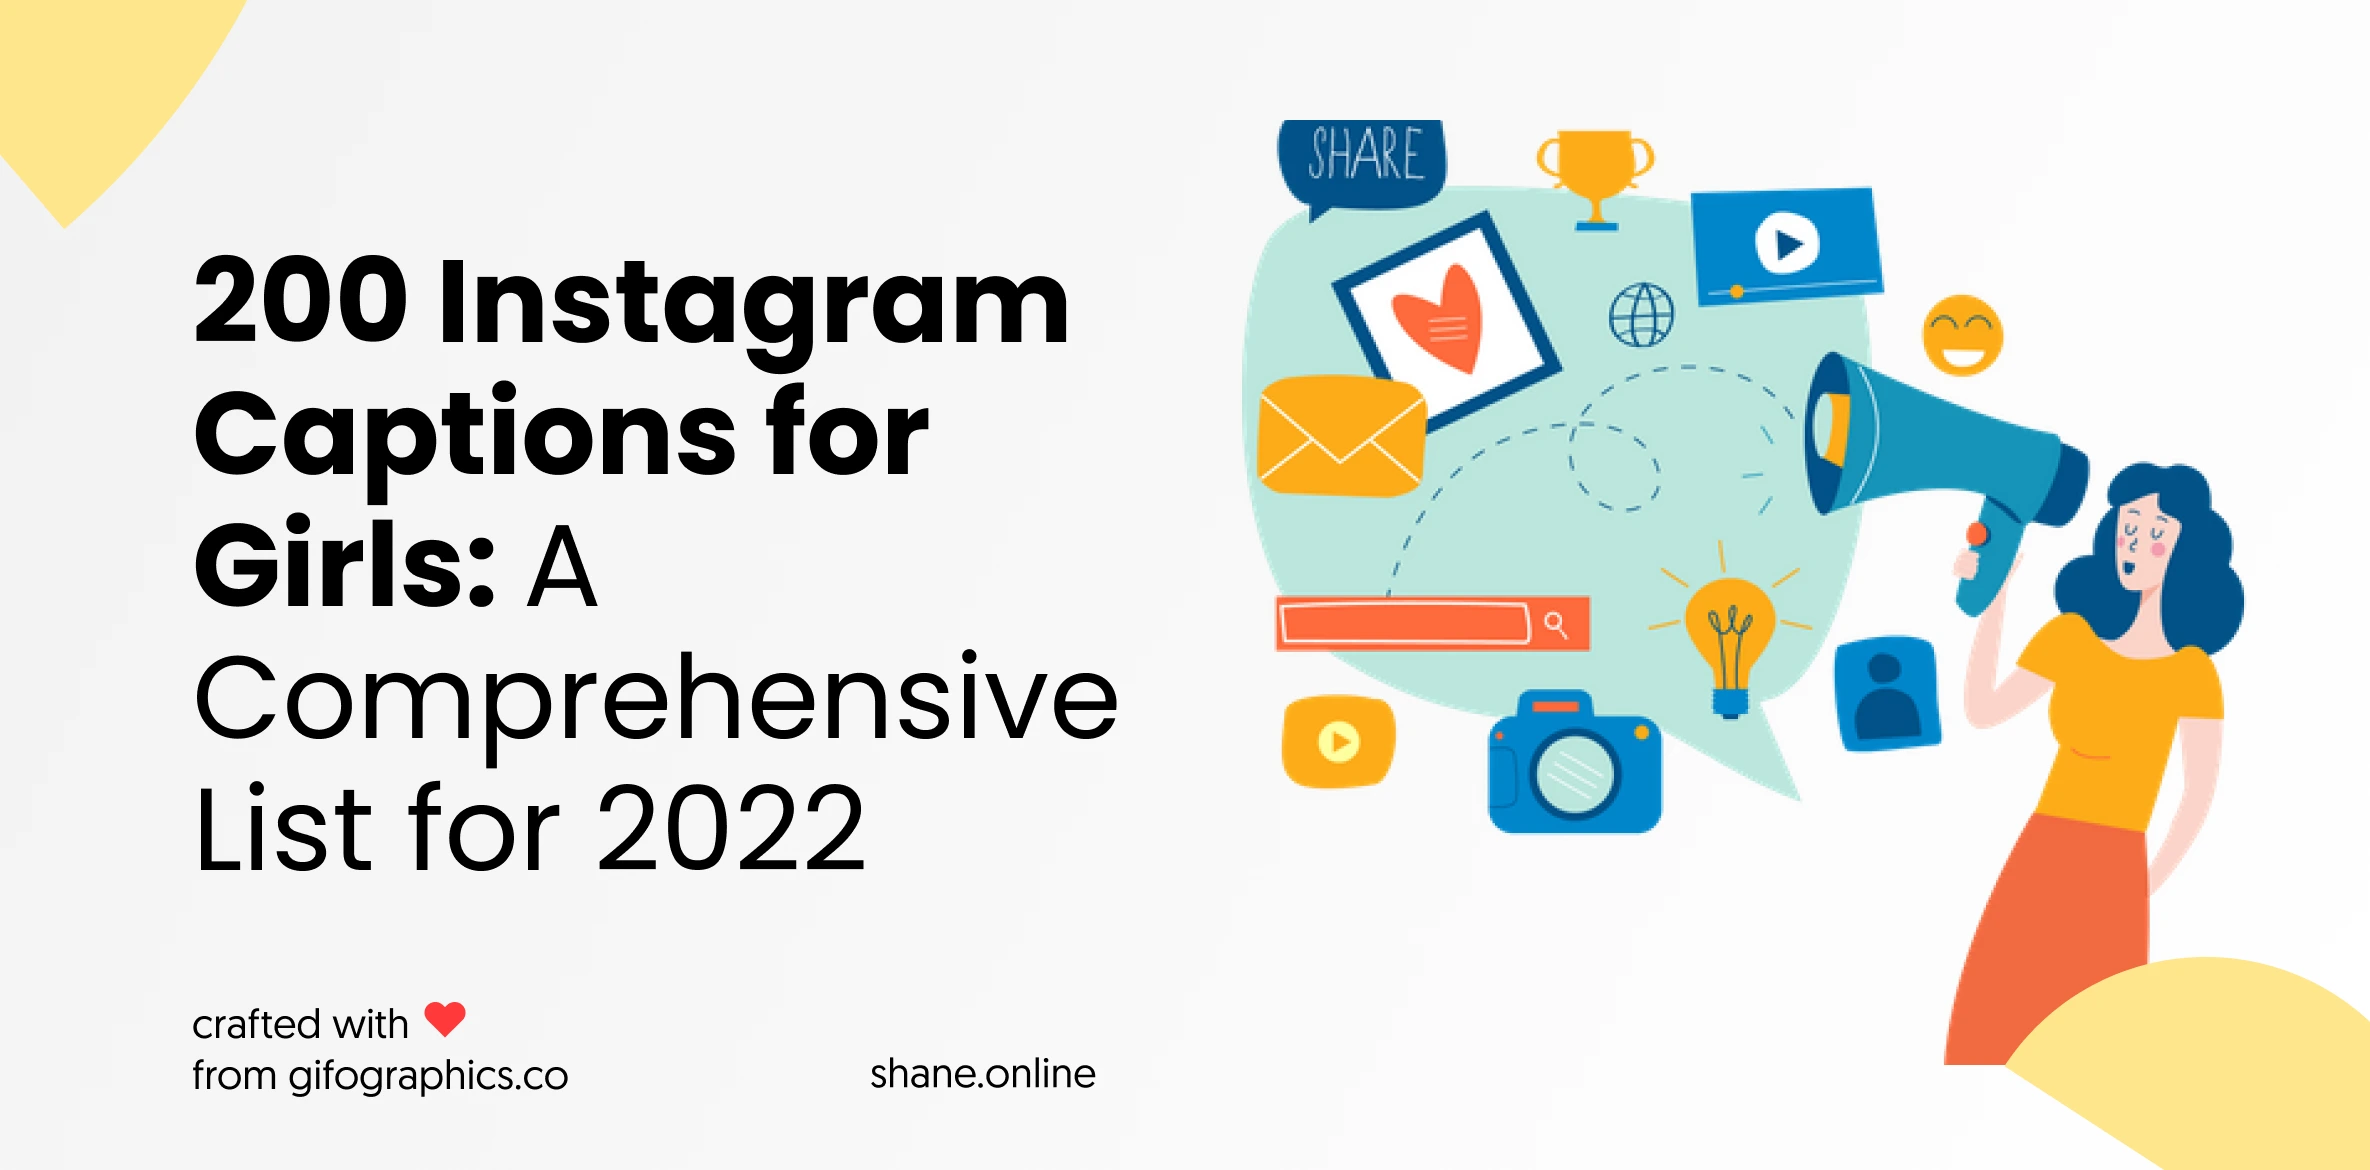 200 Instagram Captions for Girls: A Comprehensive List for 2022